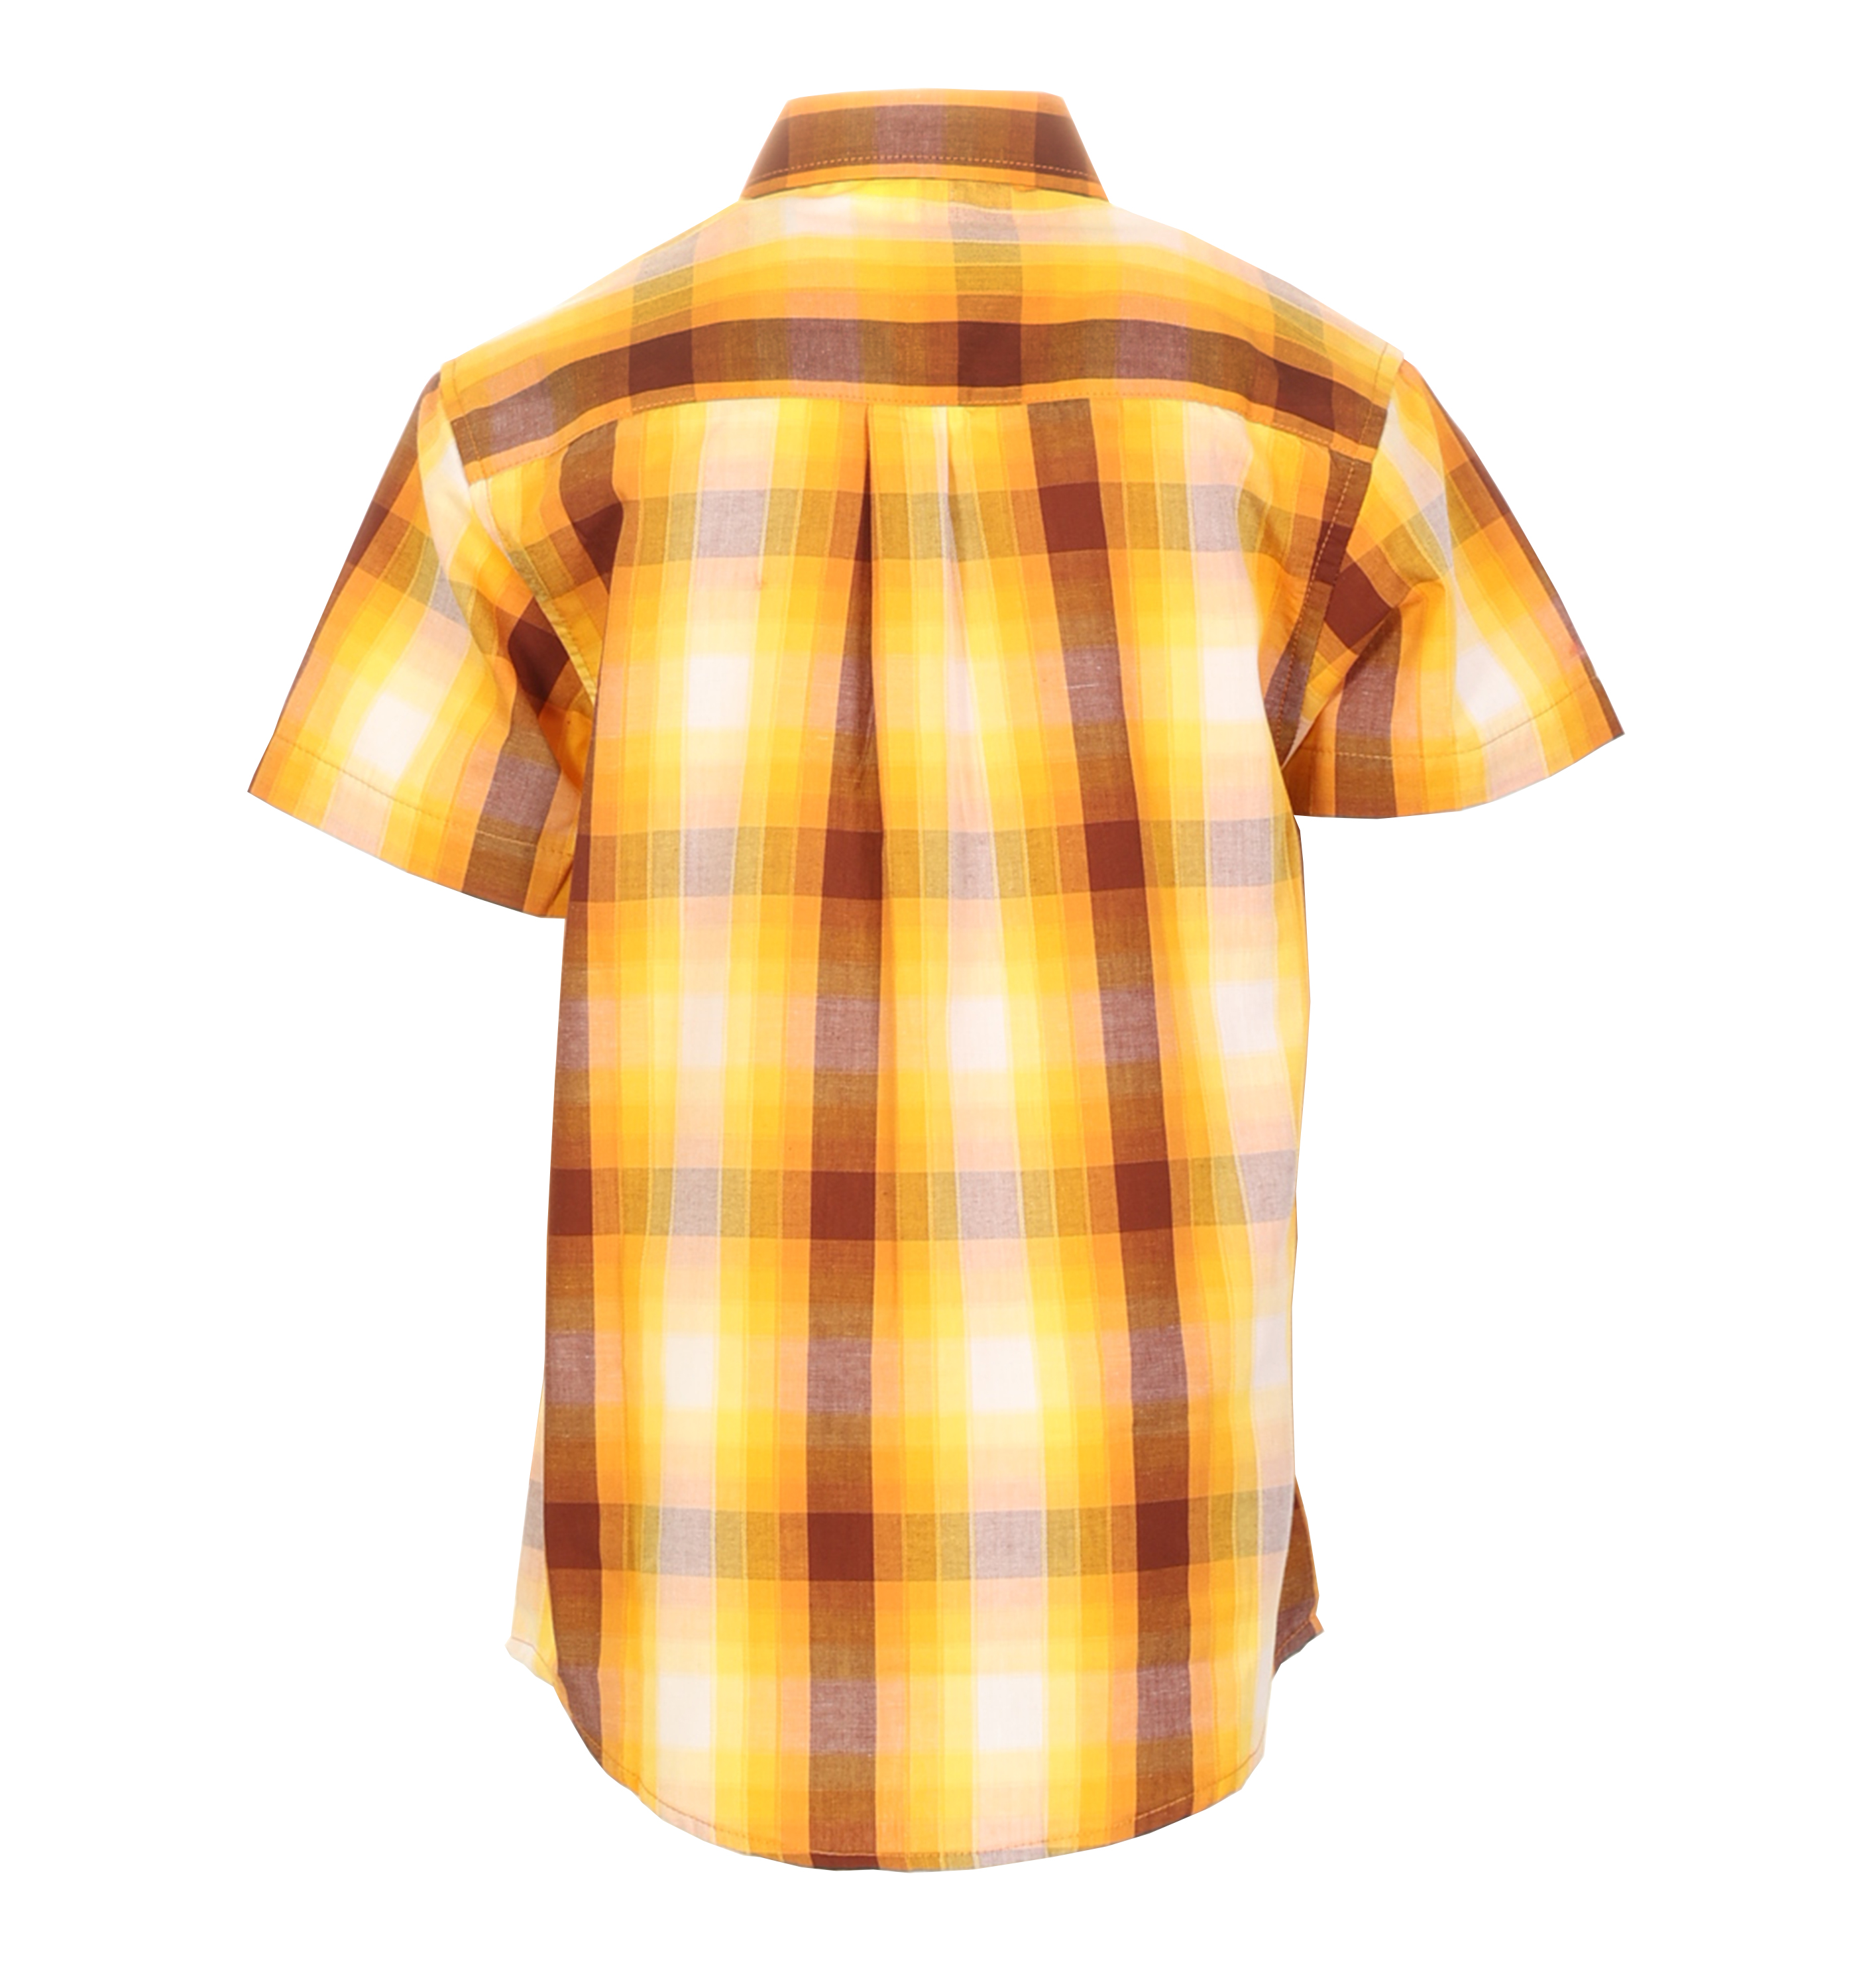 Gioberti Big Boys Long Sleeve Button Down Plaid Checked, Orange/Yellow/Brown Shirt 10